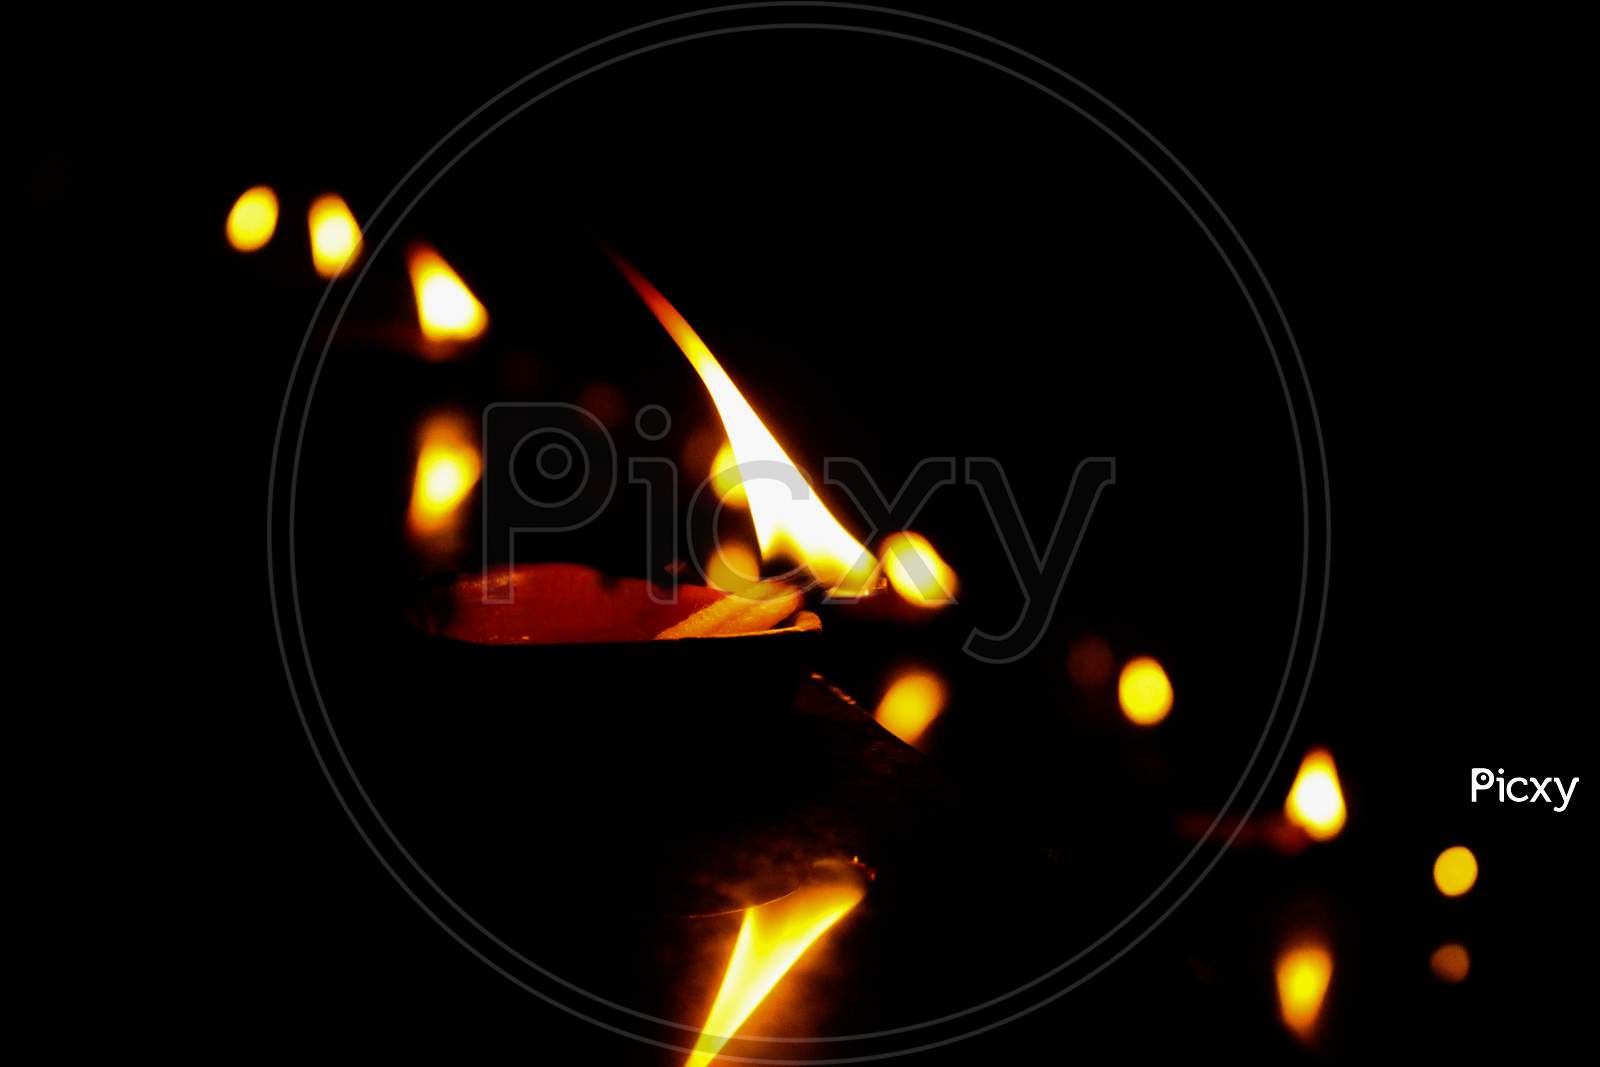 The festival of lights Deepawali or diwali celebration